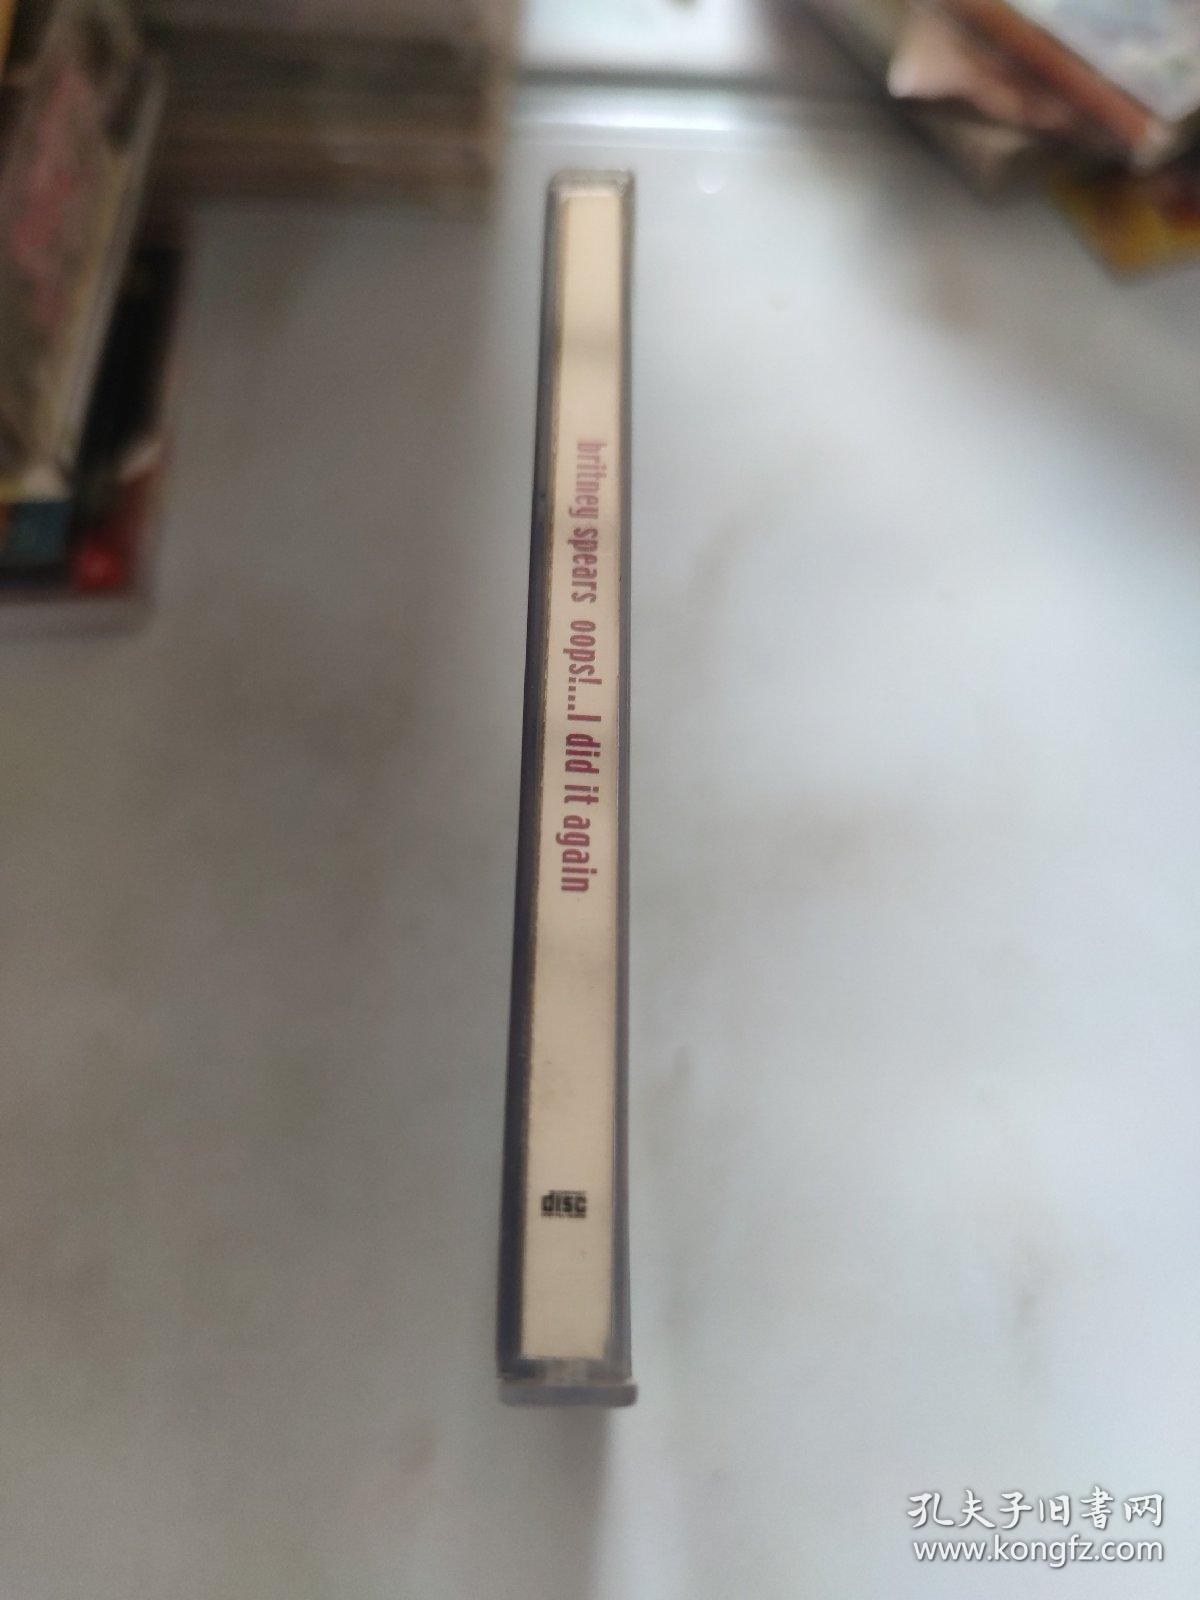 britney spears CD